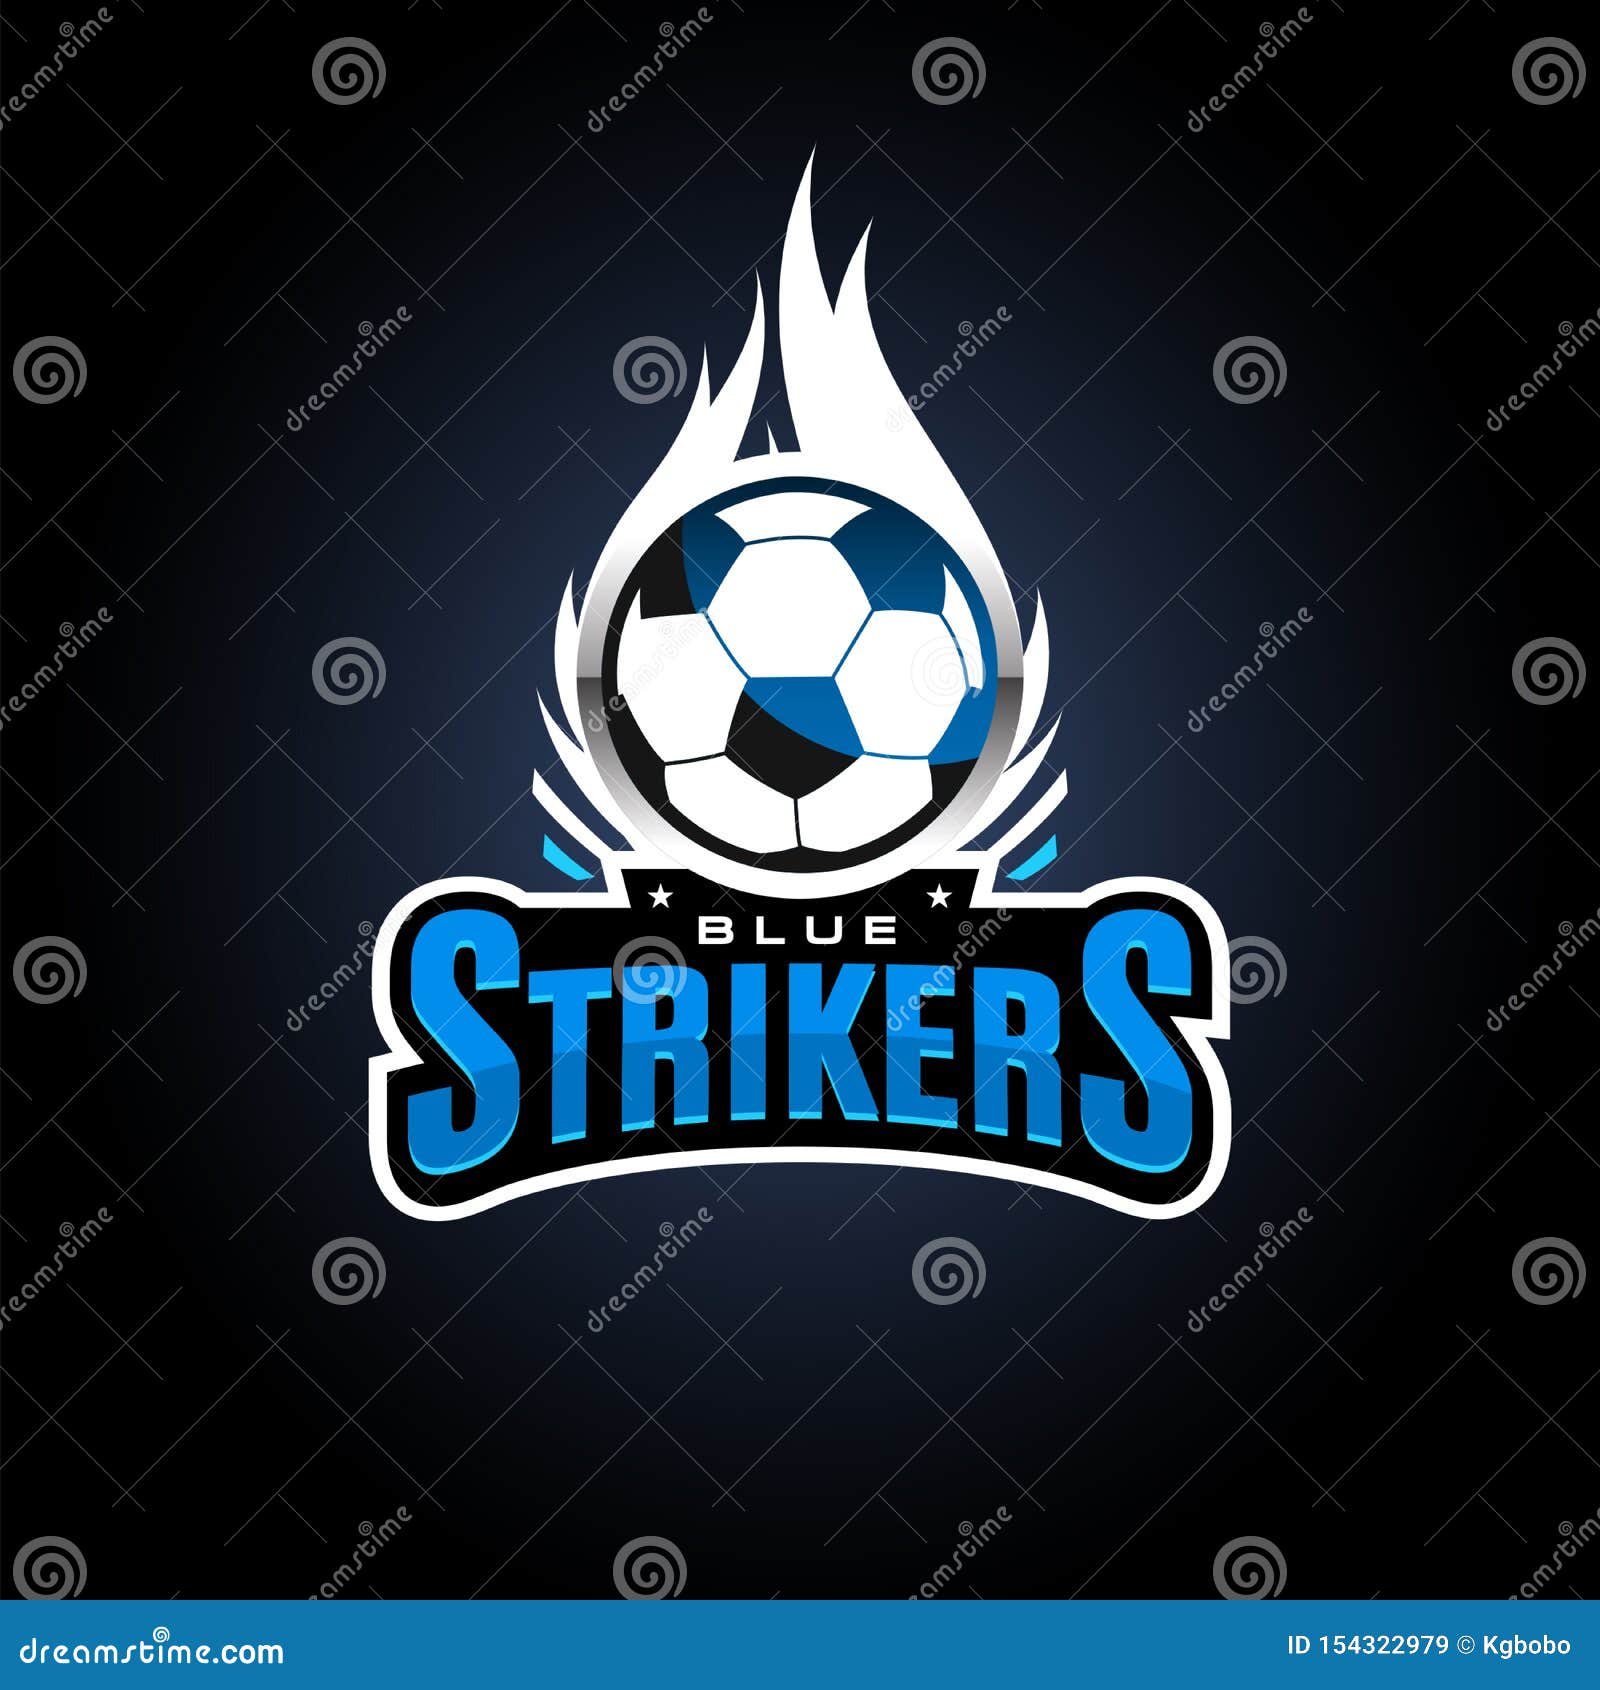 soccer strikers esport logo